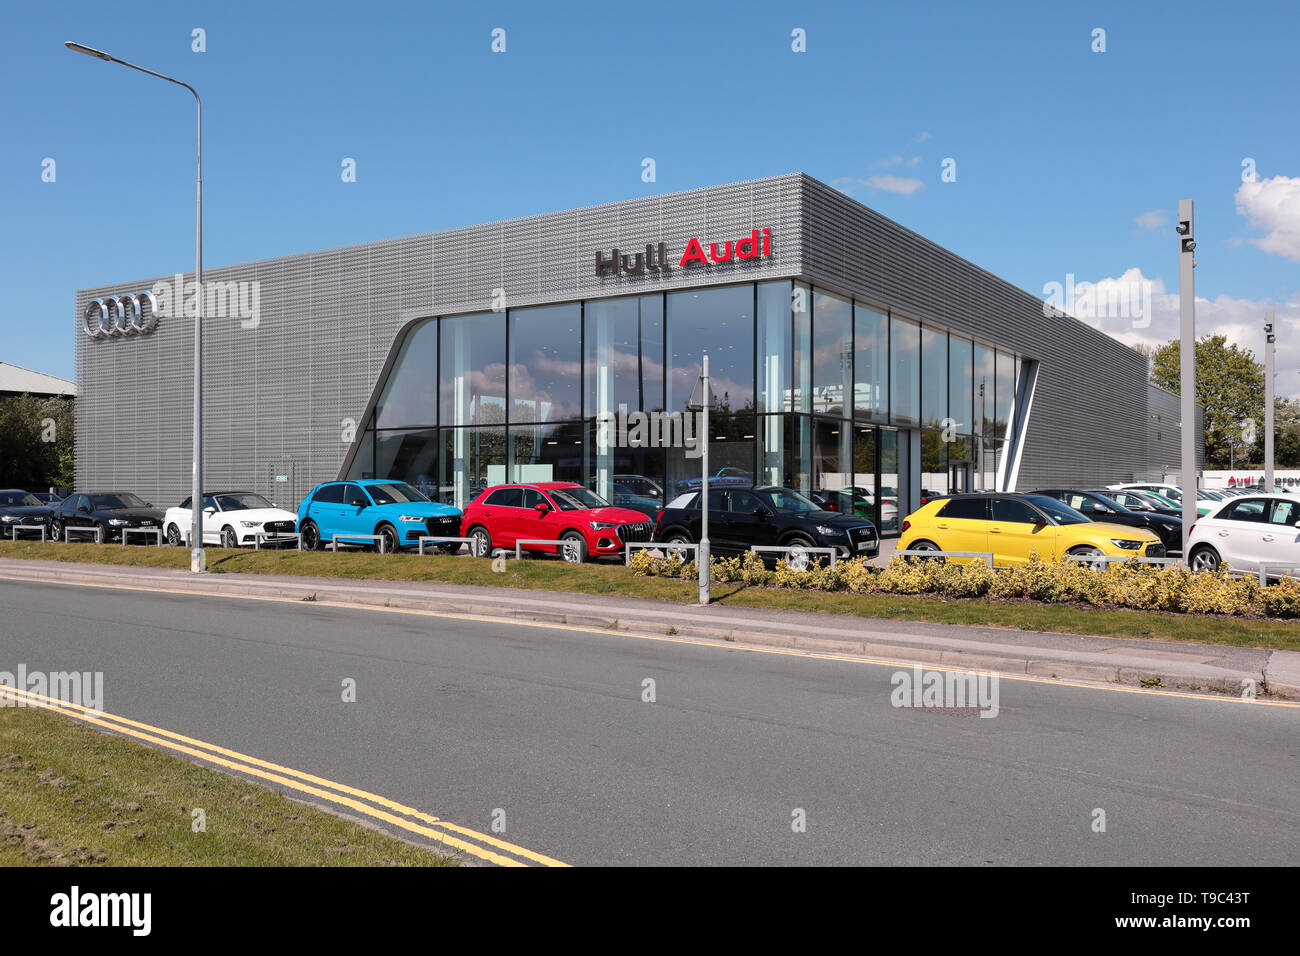 Hull Audi Dealership showroom against a clear blue sky Stock Photo